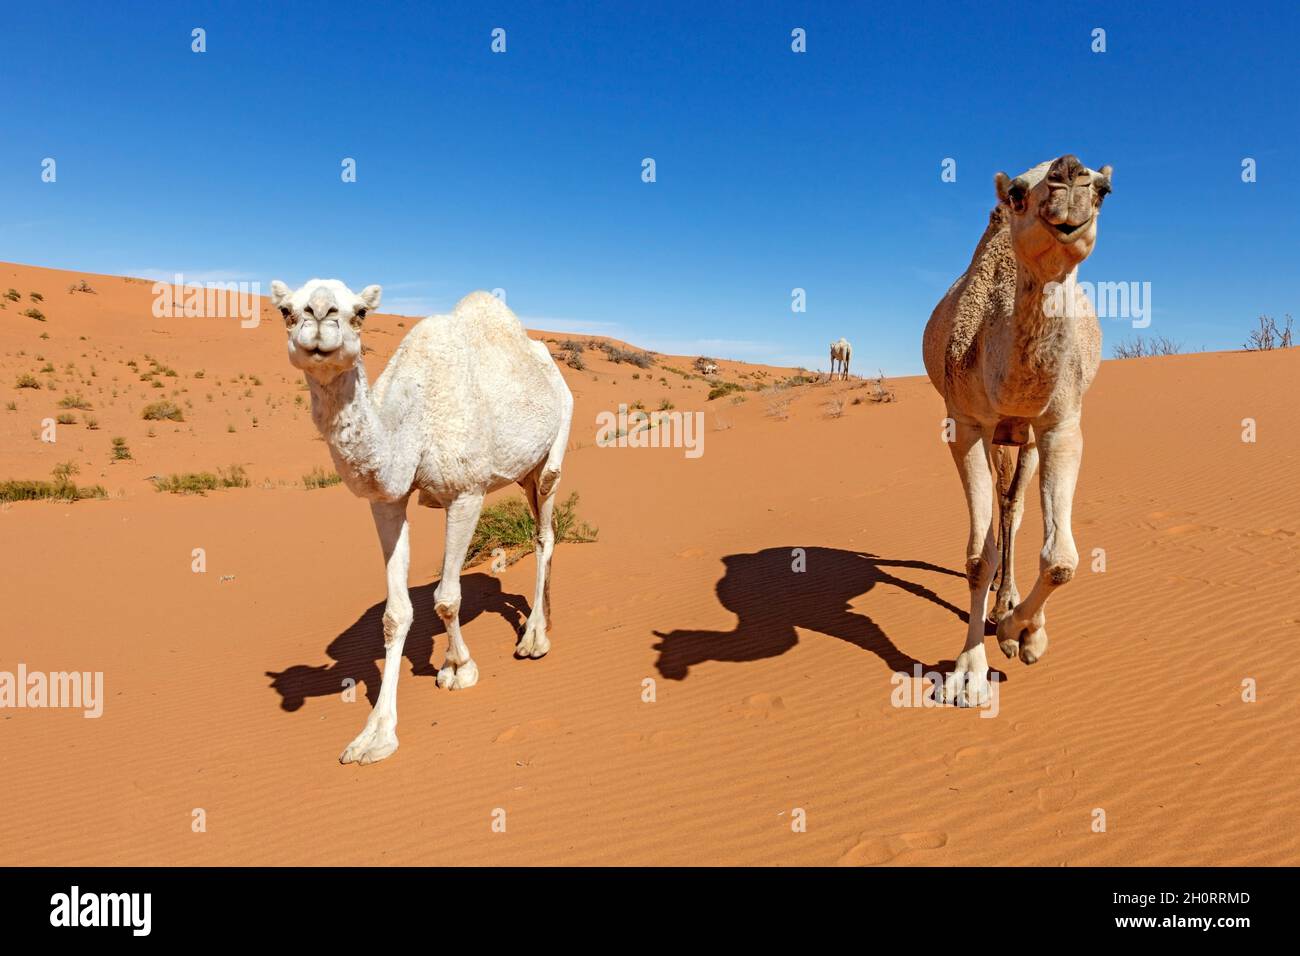 Three camels walking across sand dunes in the desert, Saudi Arabia Stock Photo